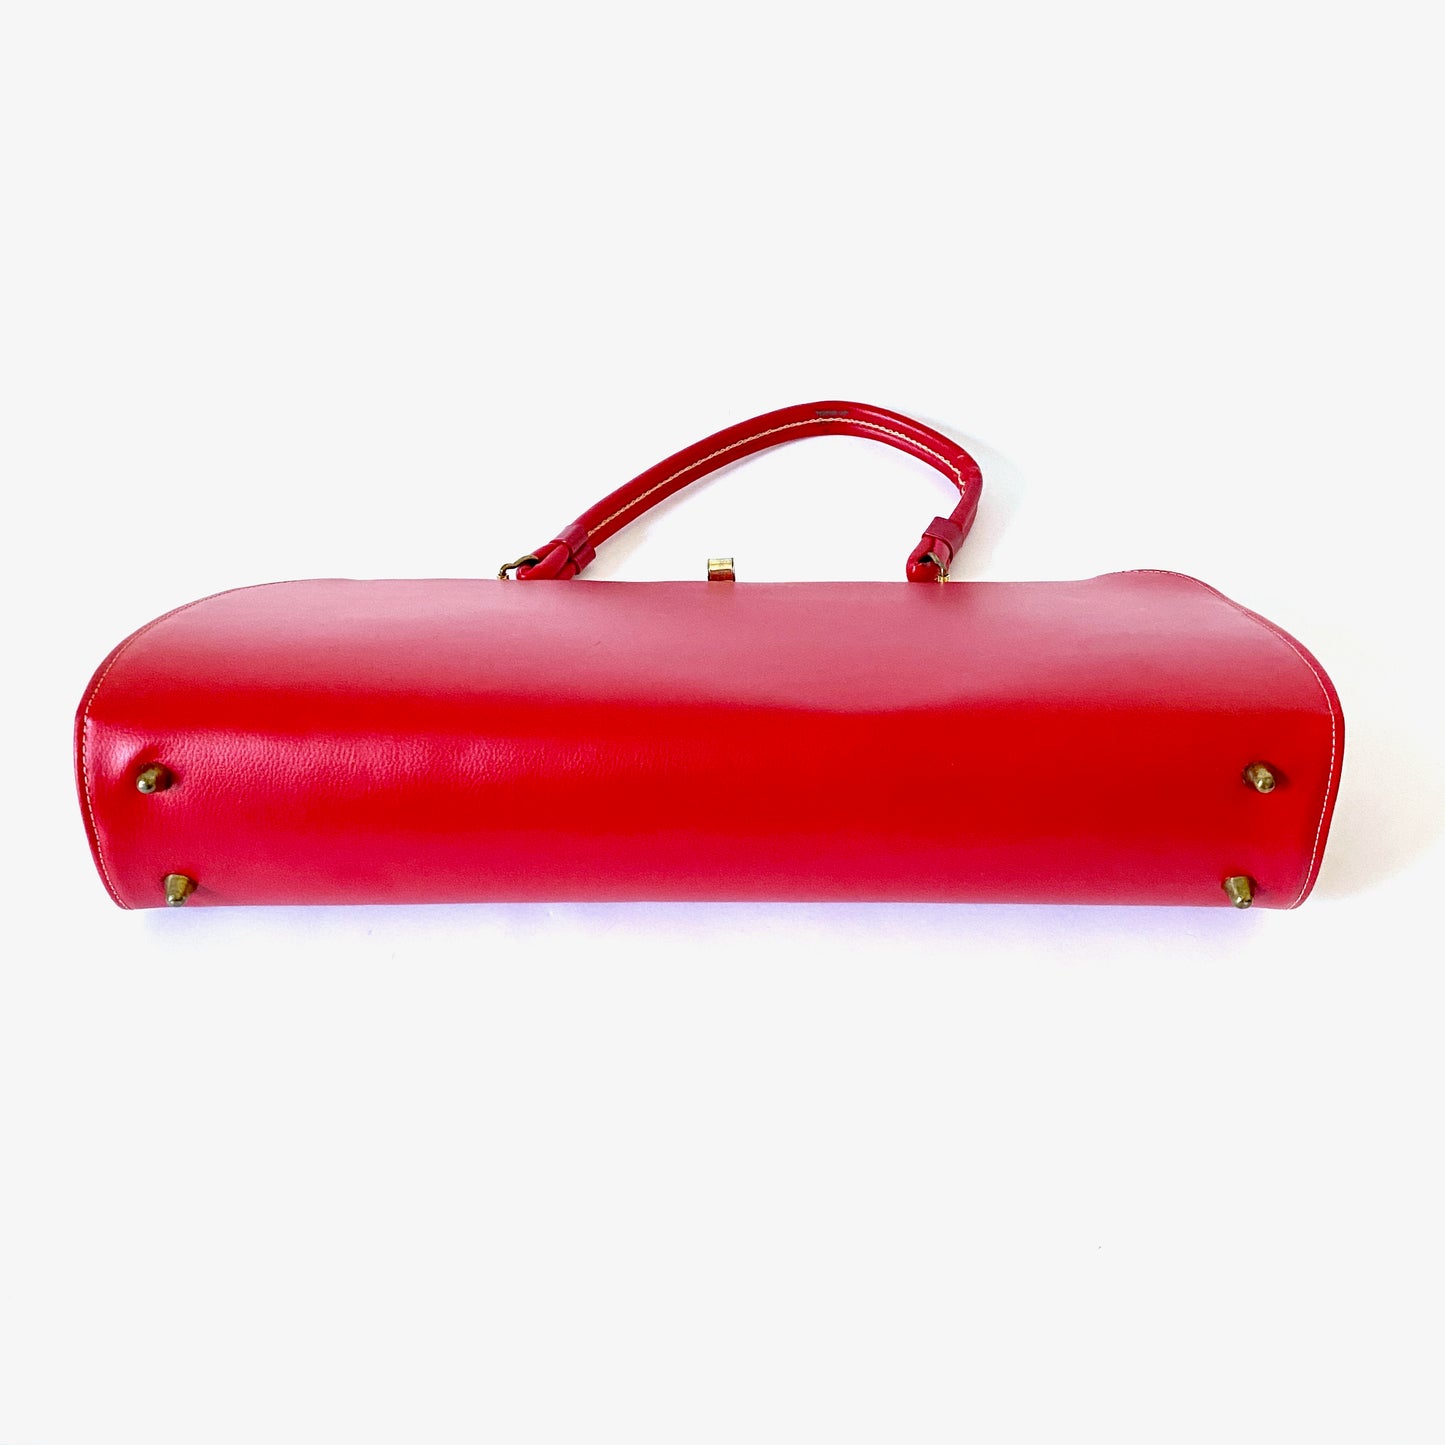 1960s Mod Bag Vintage LIPSTICK RED Naugahyde Handbag